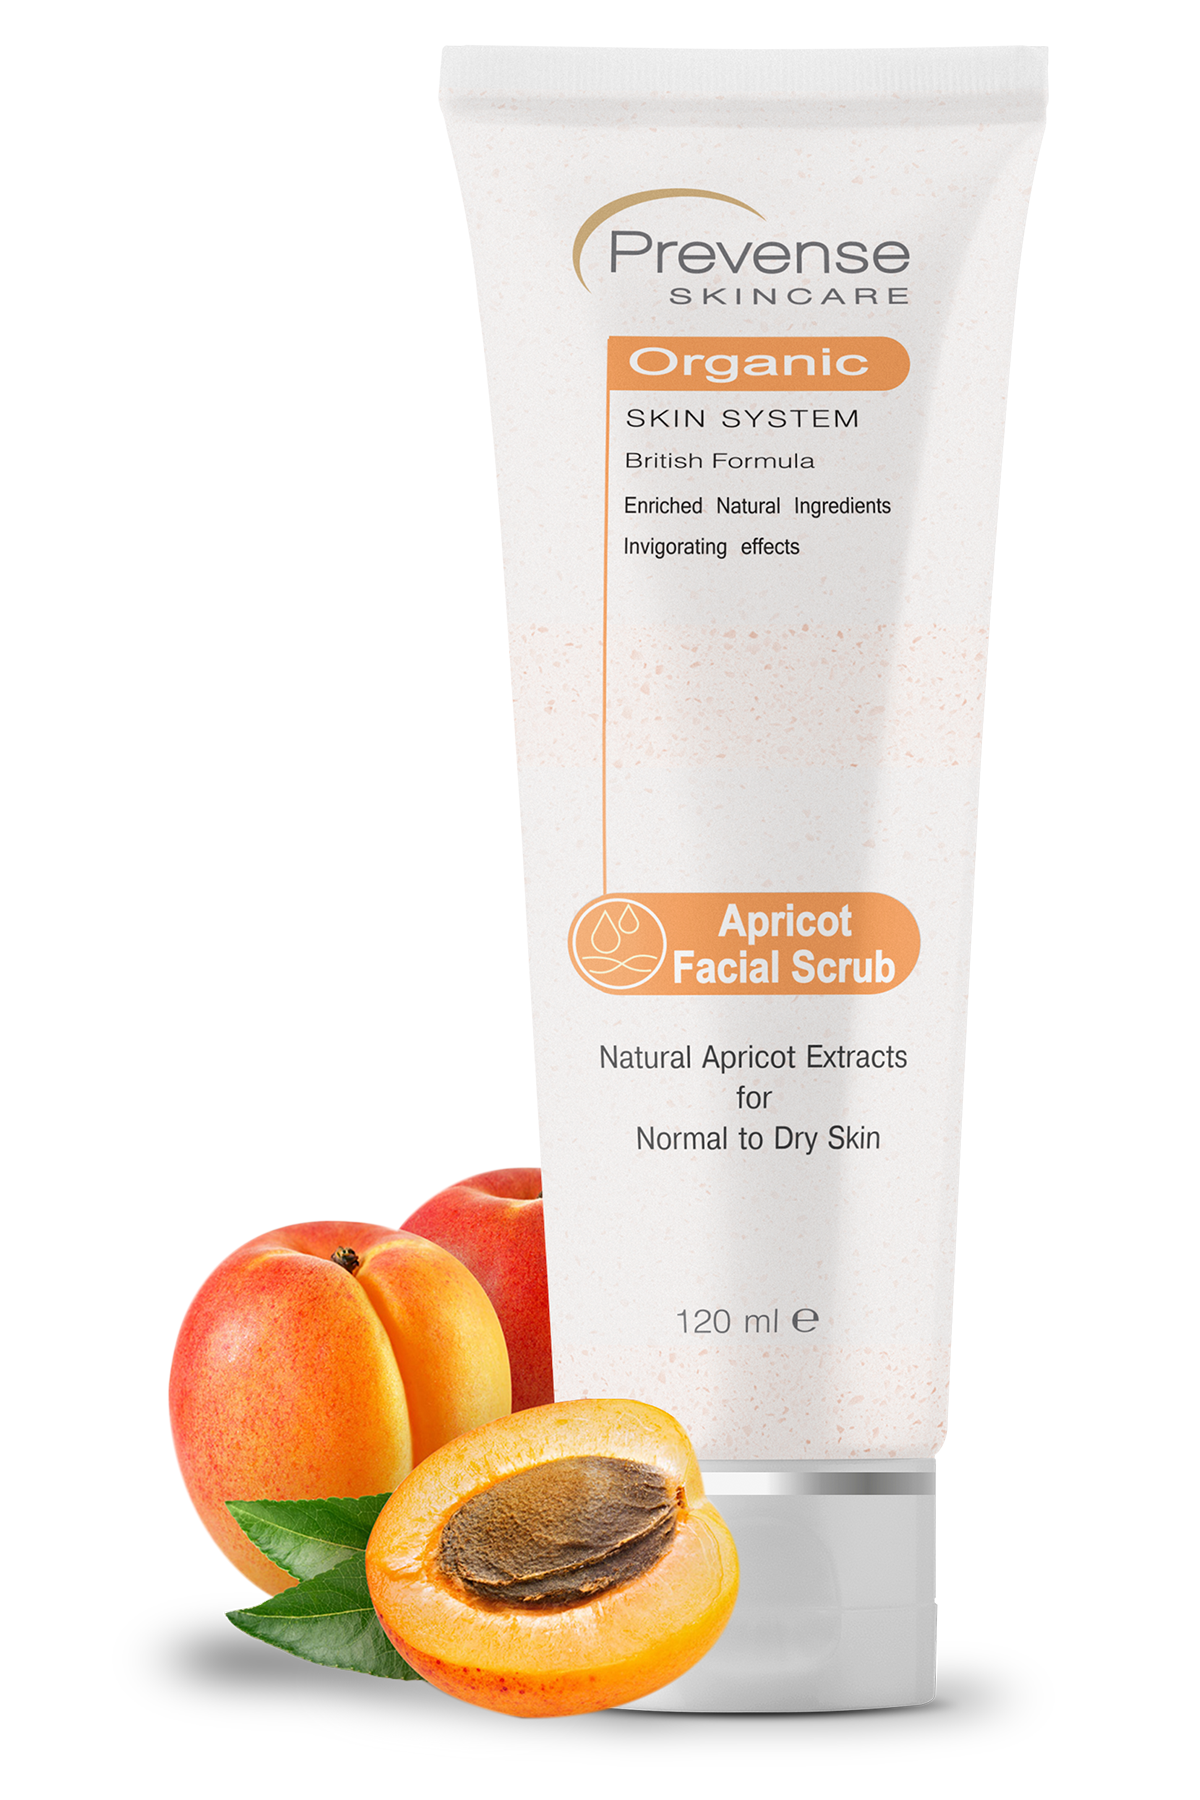 Prevense Apricot Facial Scrub For Normal To Dry Skin (120 ml)